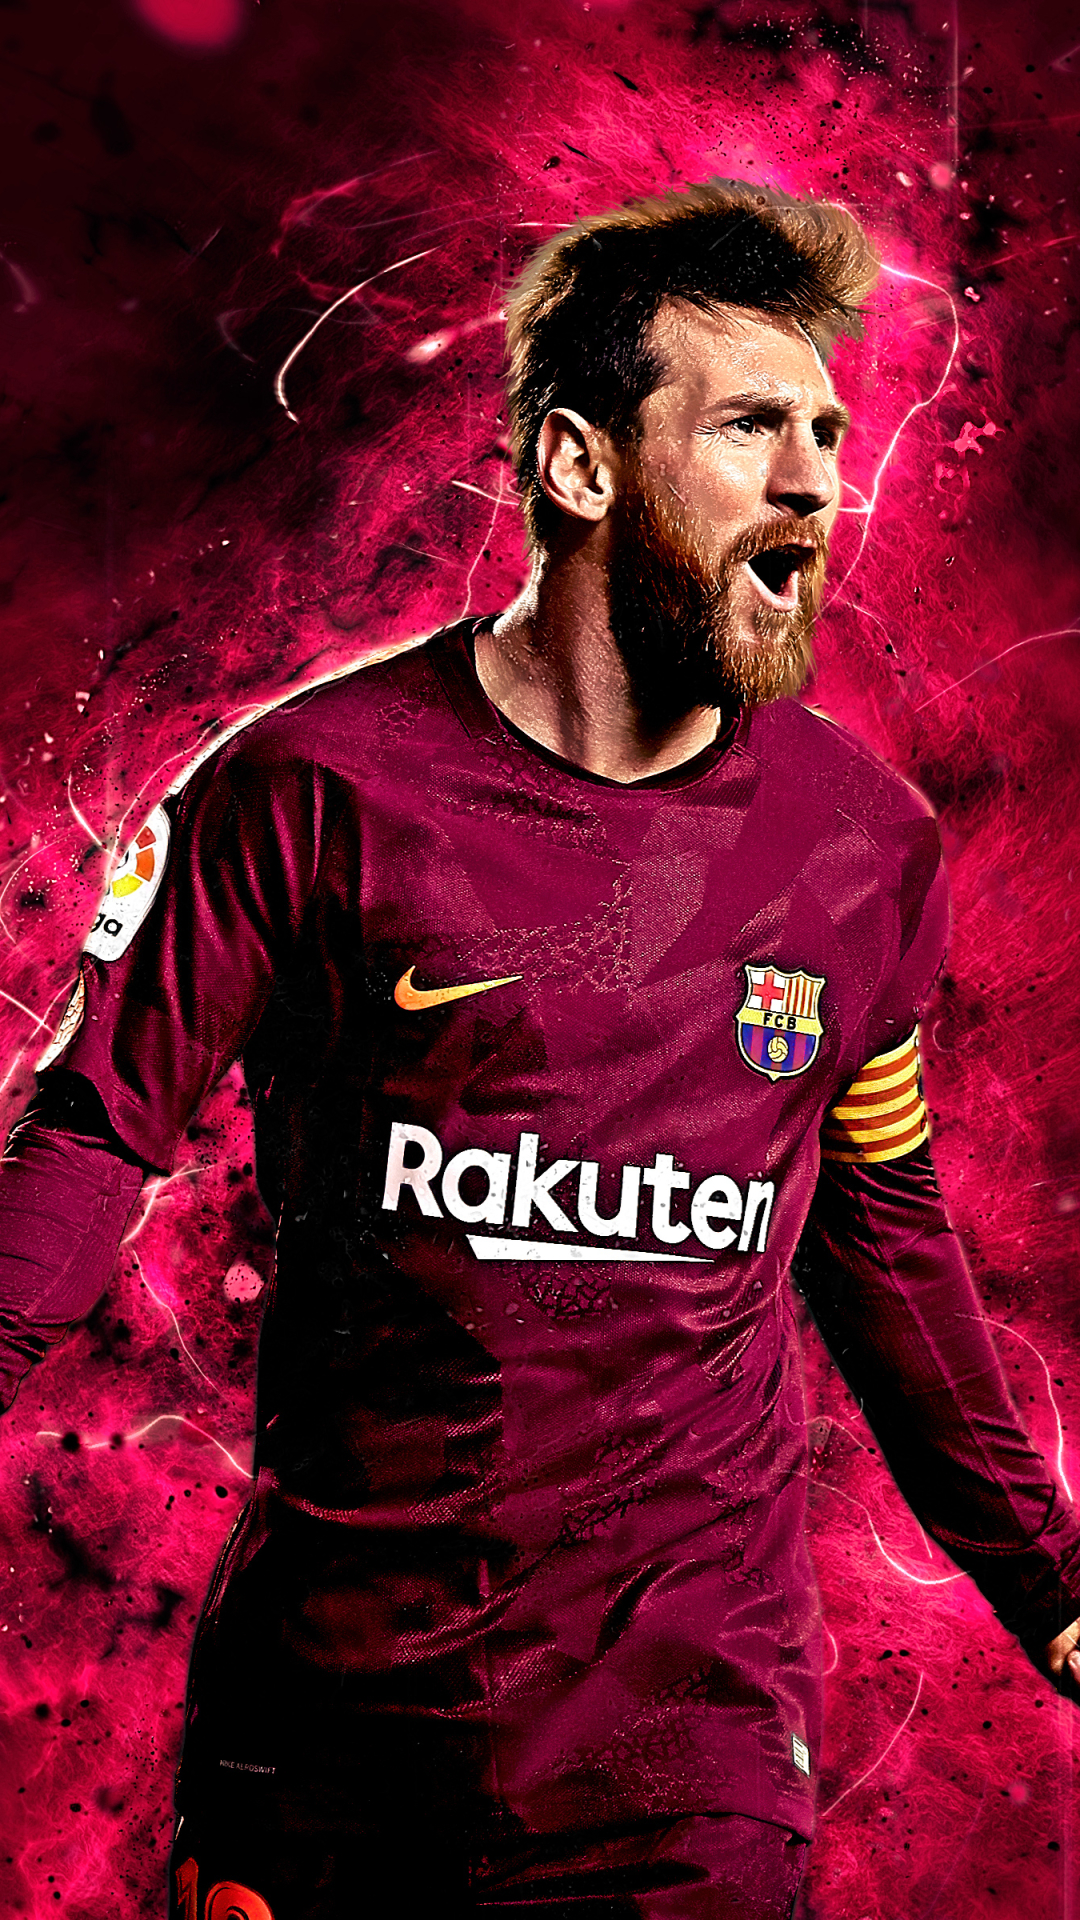 [65+] Wallpaper Of Lionel Messi | WallpaperSafari.com